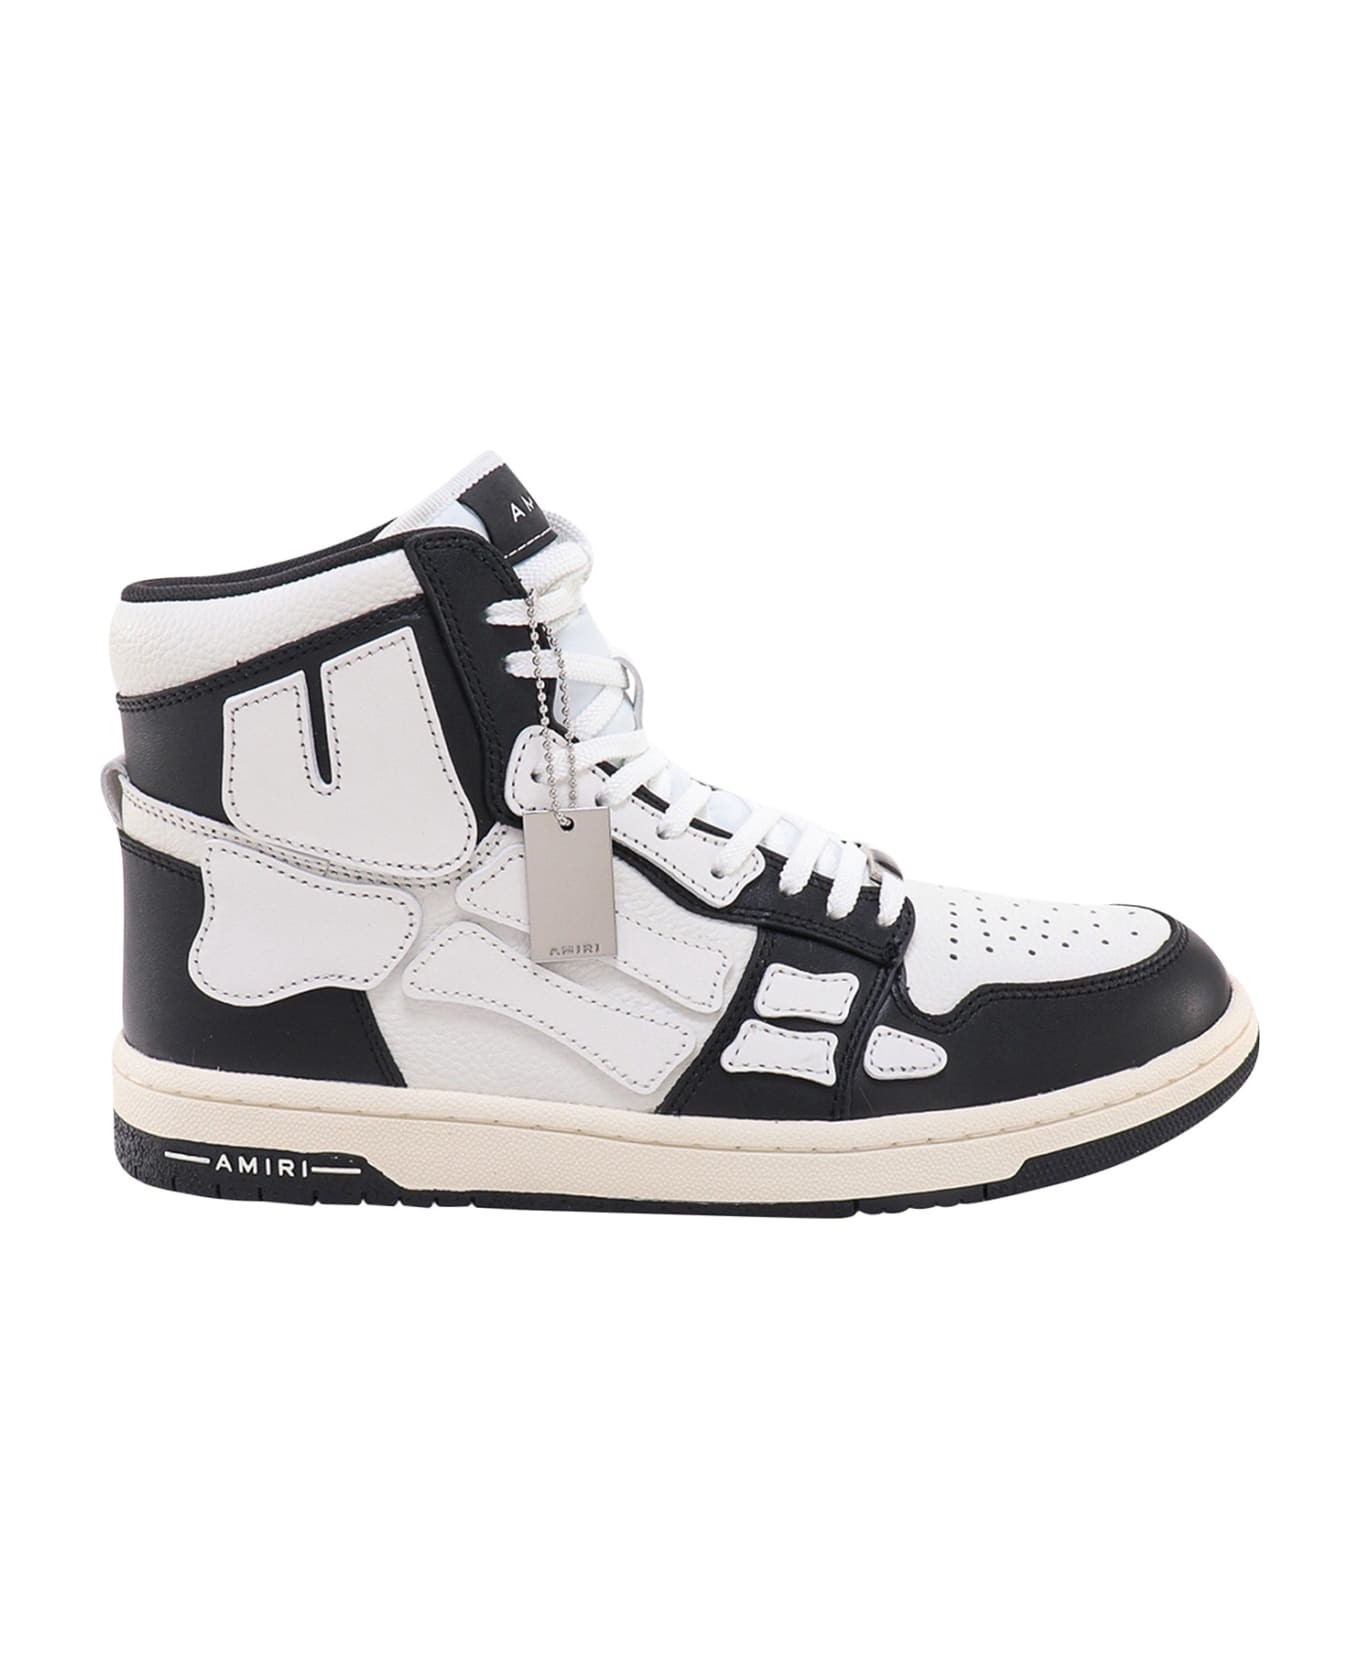 AMIRI Sneakers - BLACK/WHITE スニーカー